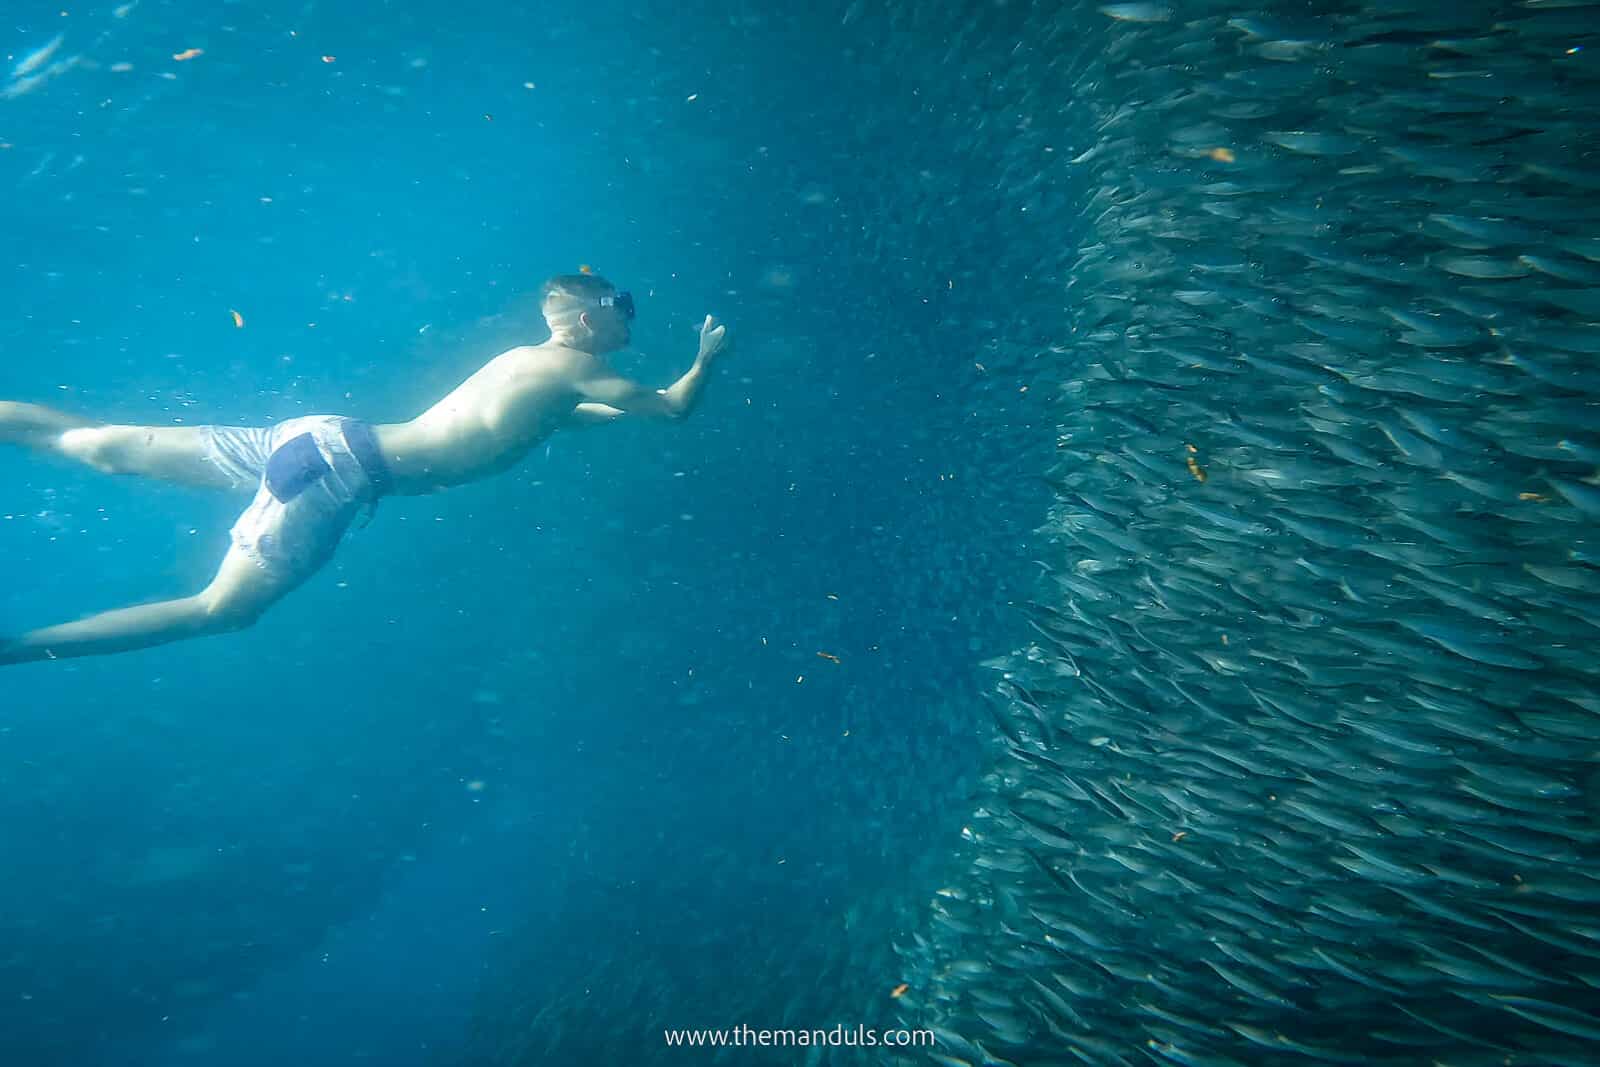 moalboal sardine run, tourist spots cebu, best attractions cebu, things to do on cebu island, cebu itinerary, moalboal sardines, cebu sardine run, moalboal snorkelling, philippines, sea turtlea, panagsama beach drone